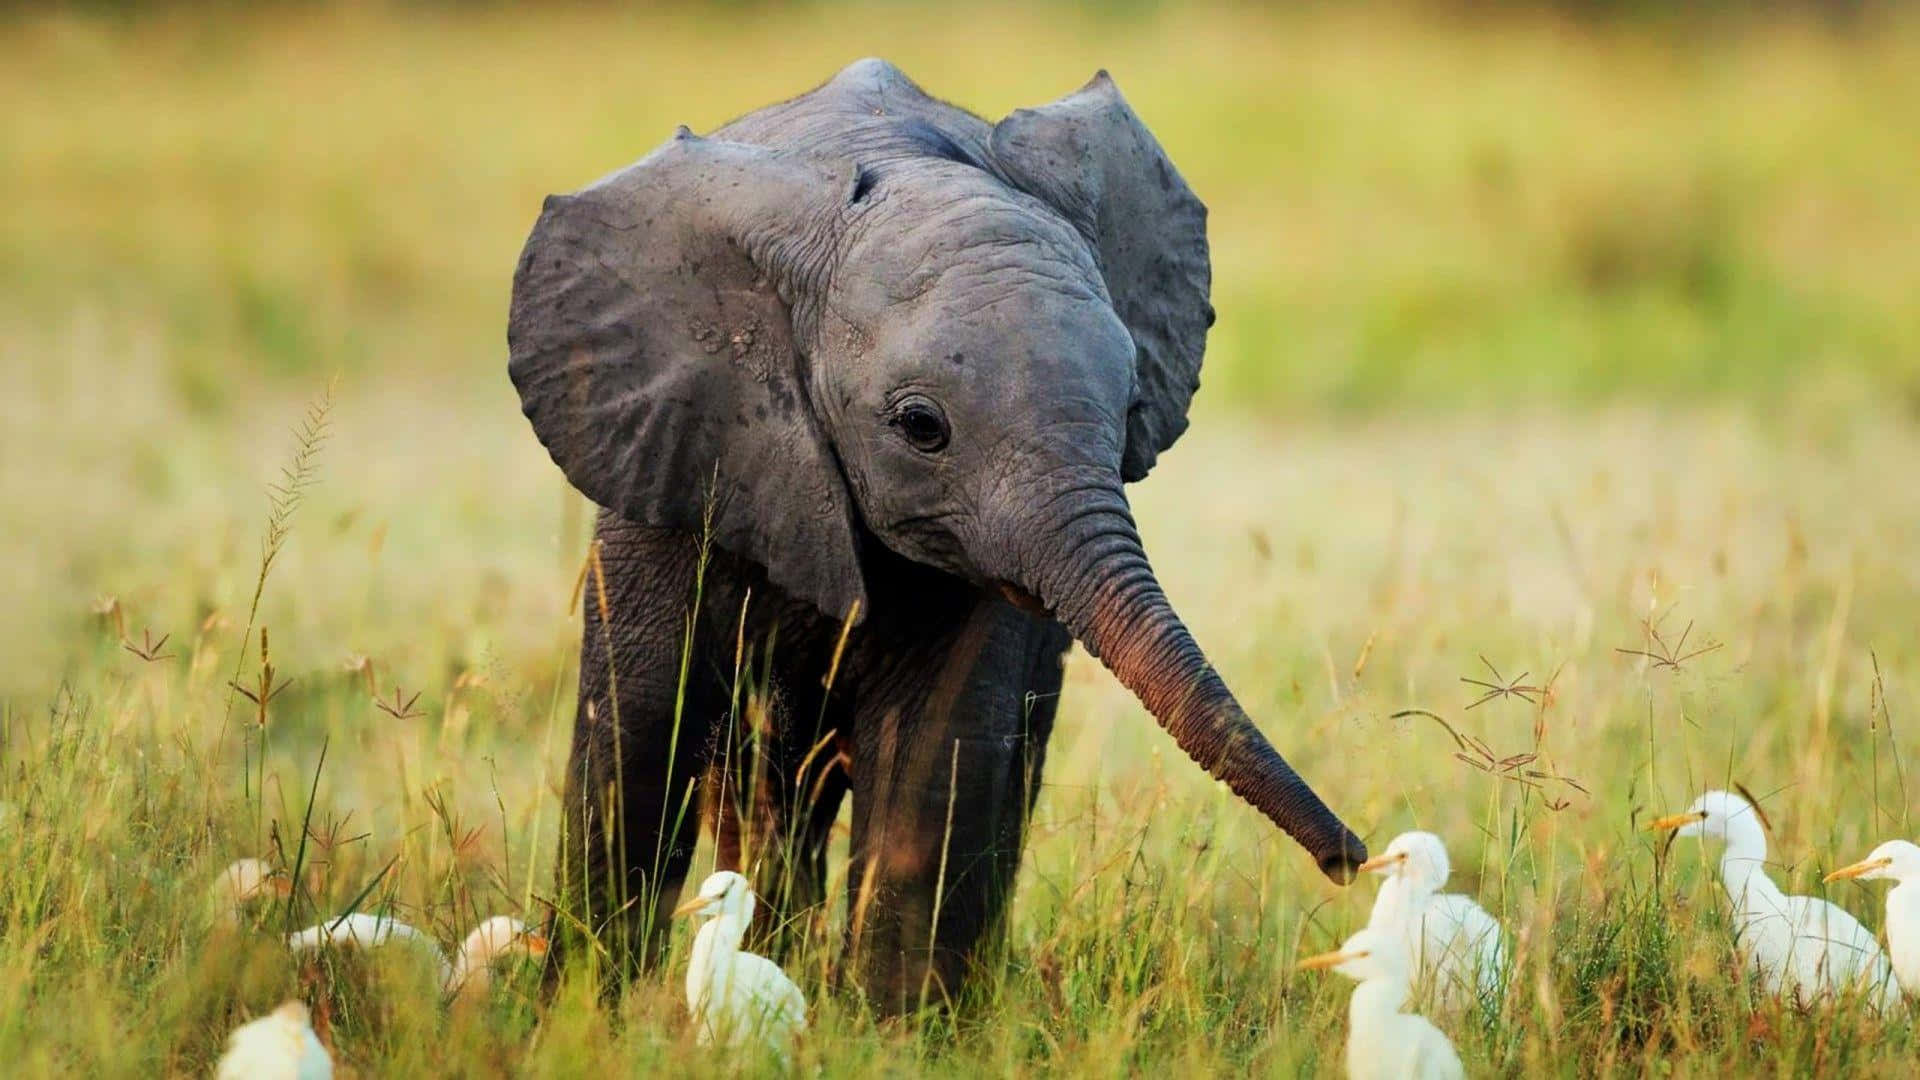 Adorably Cute Elephant